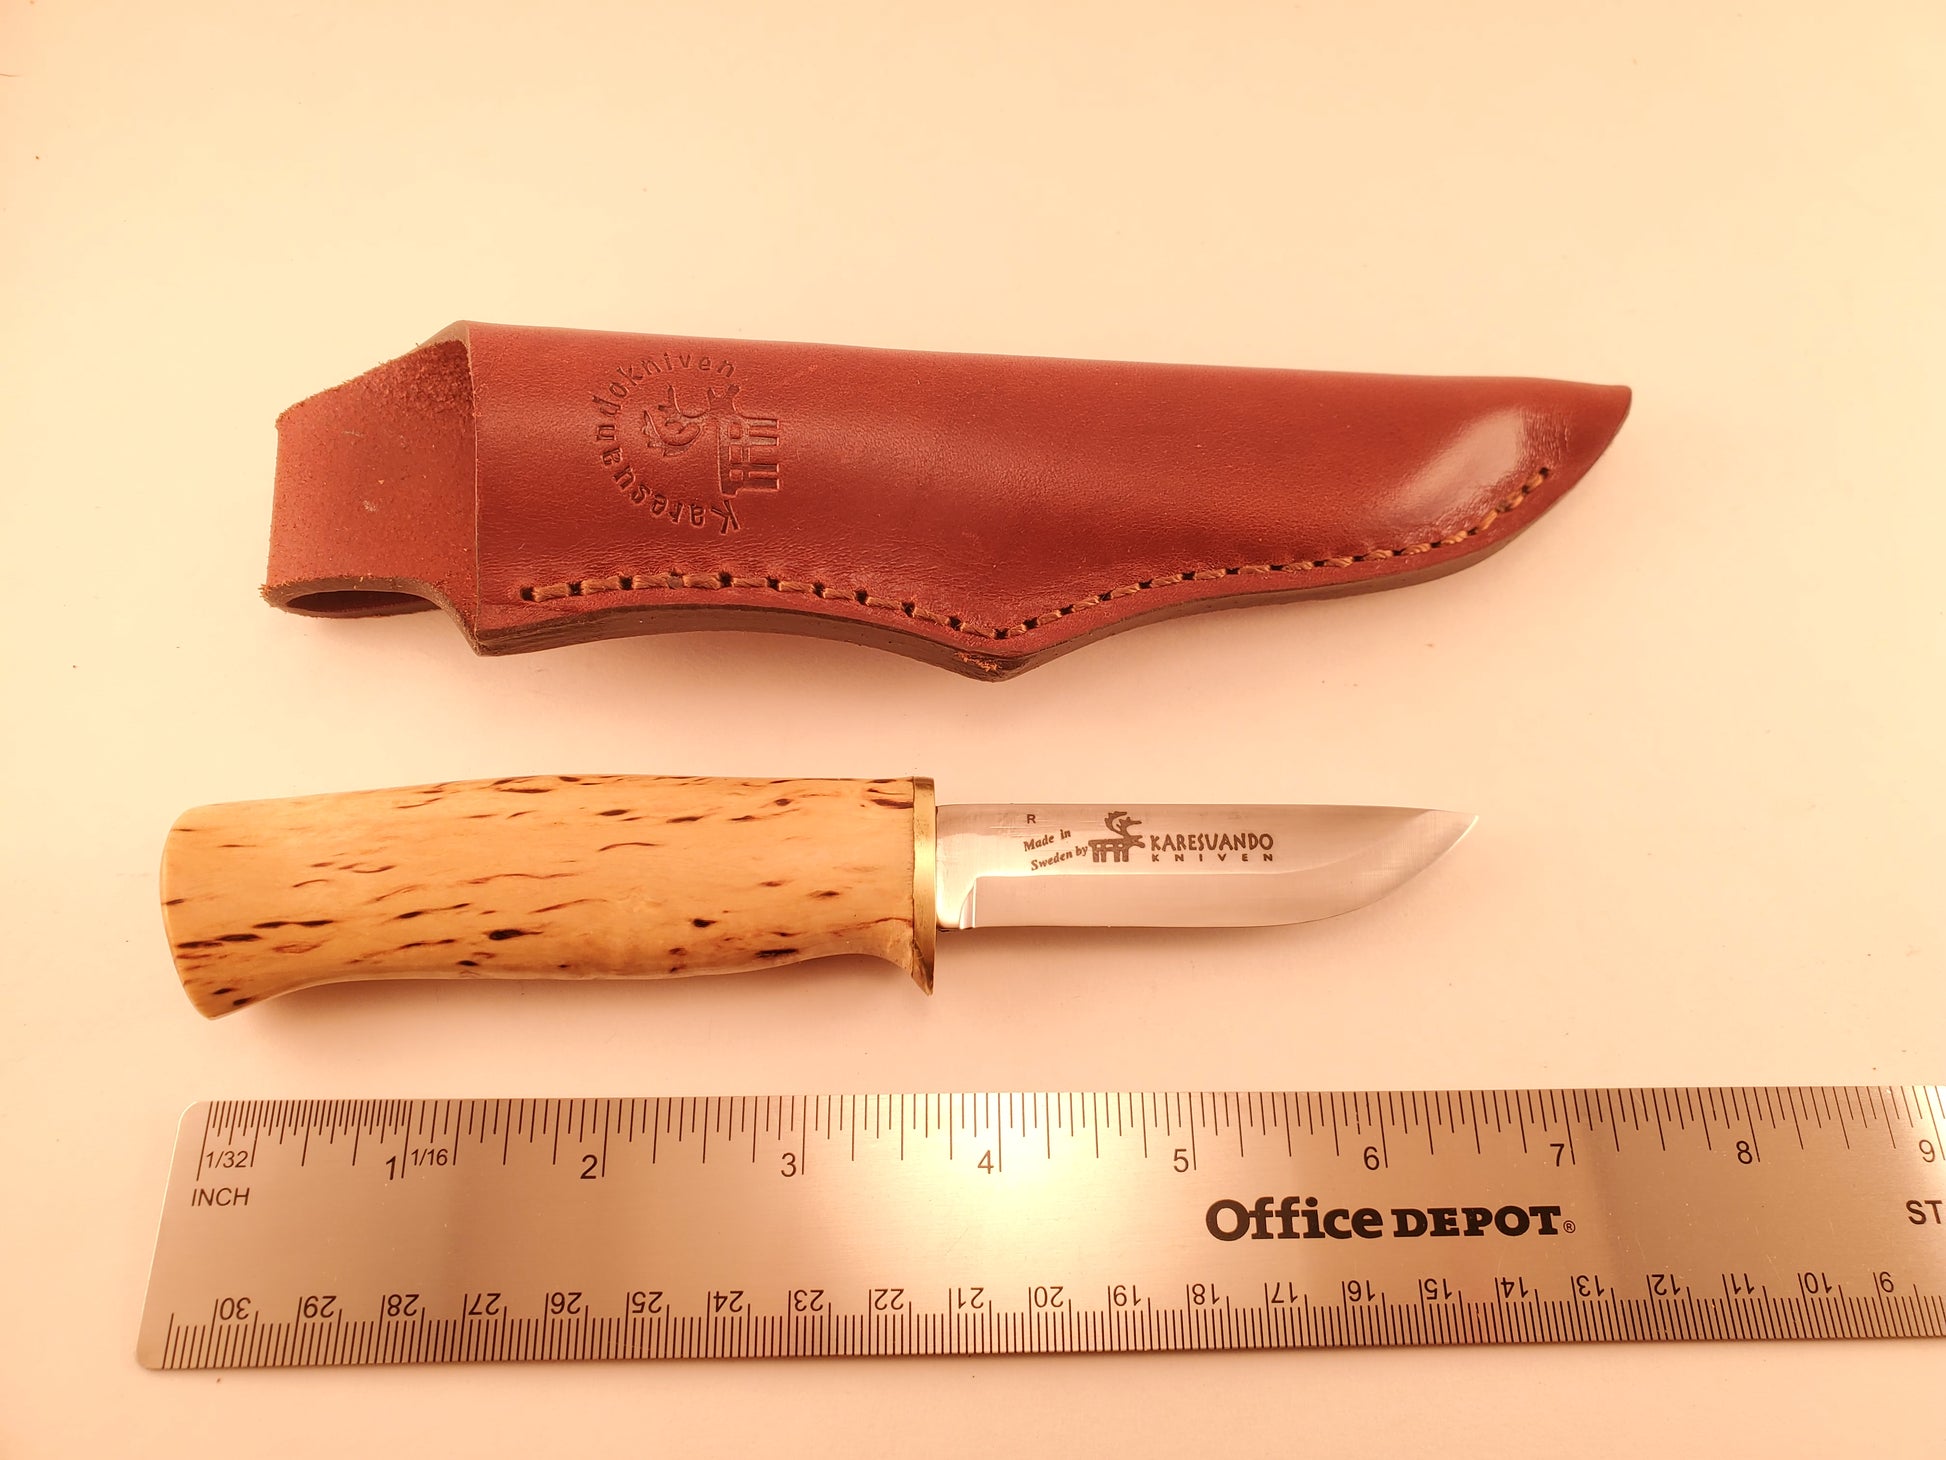 Karesuando Niibi Bushcraft Outdoor Knife Puukko